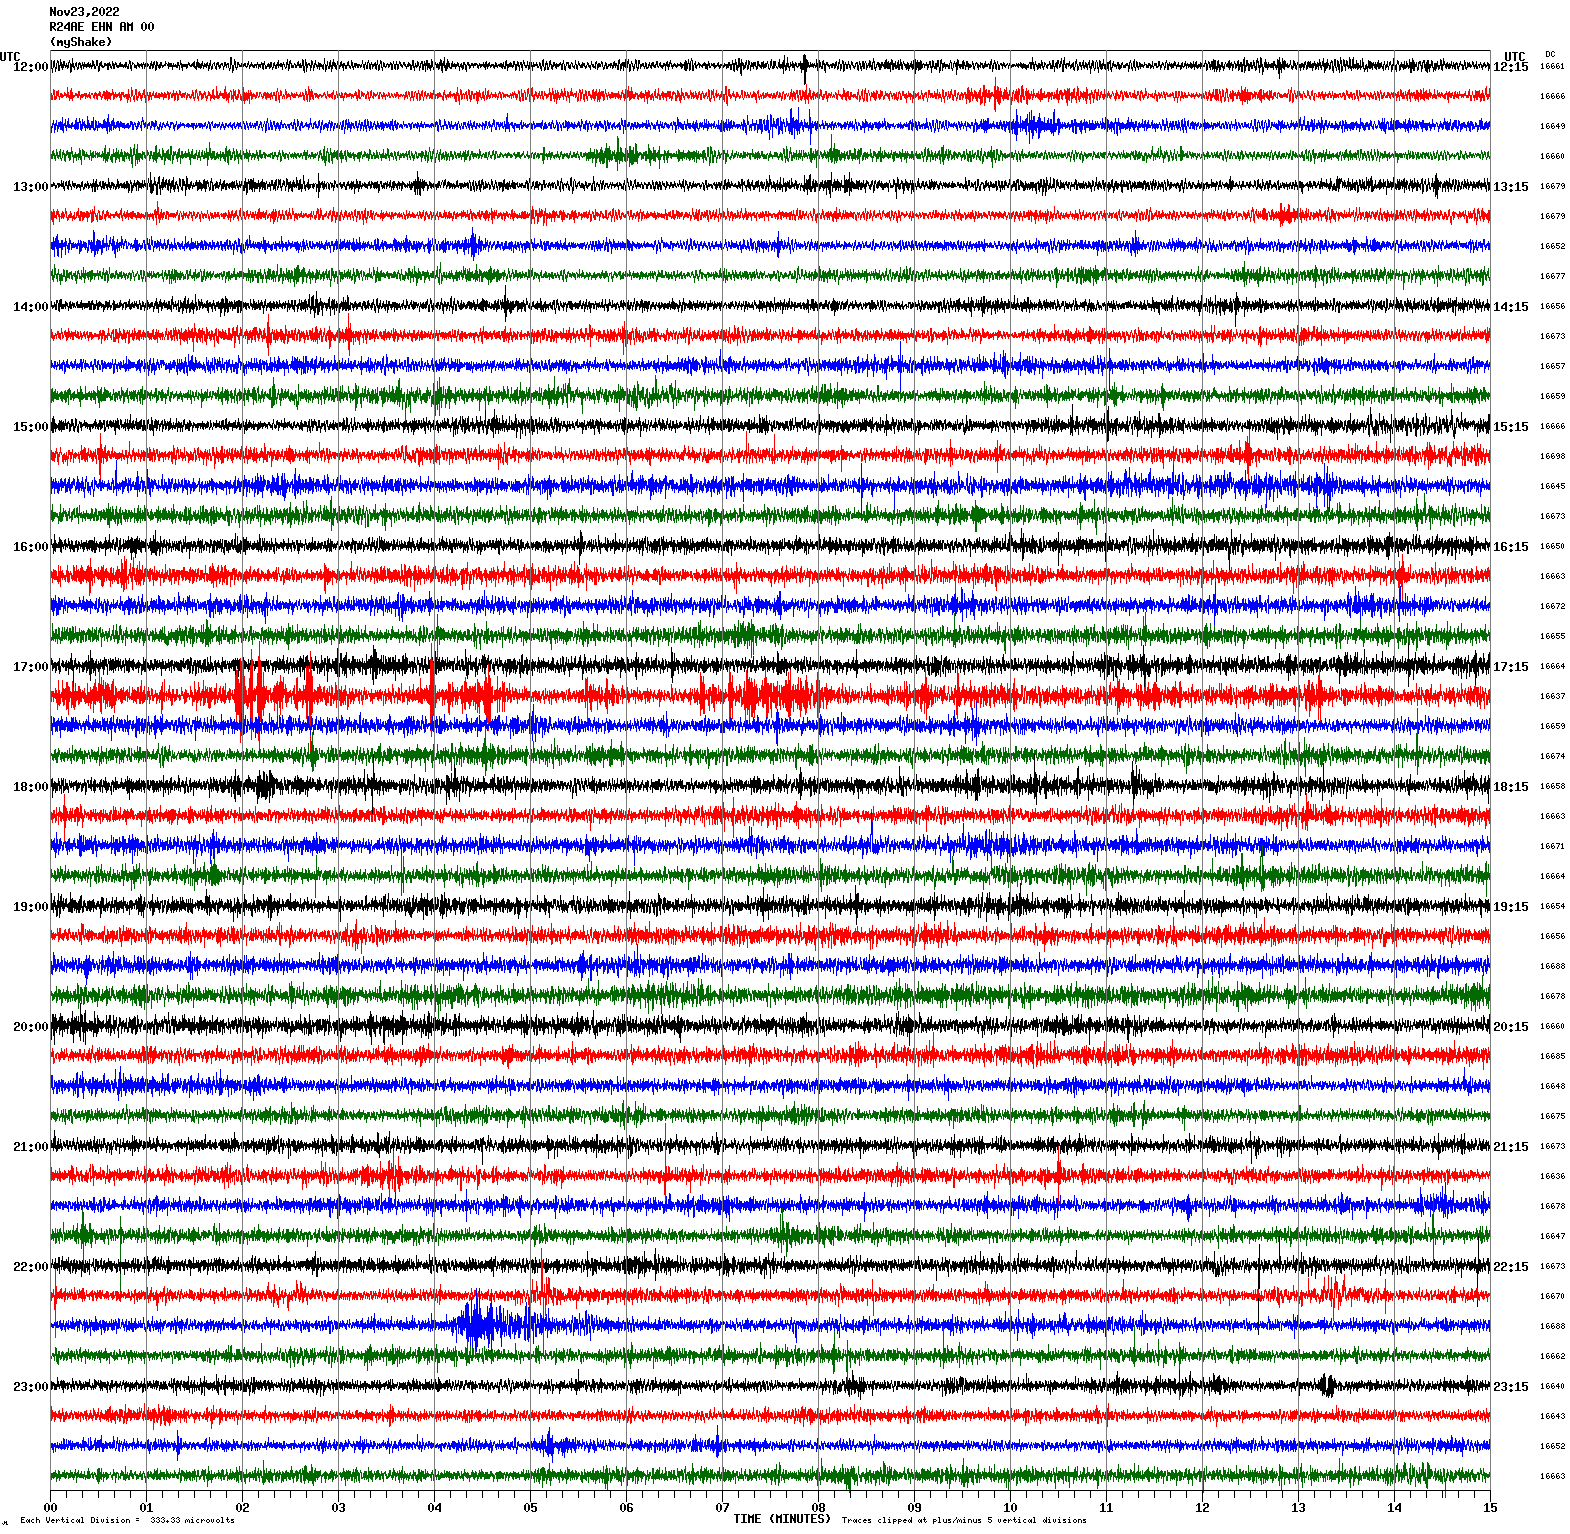 /seismic-data/R24AE/R24AE_EHN_AM_00.2022112312.gif